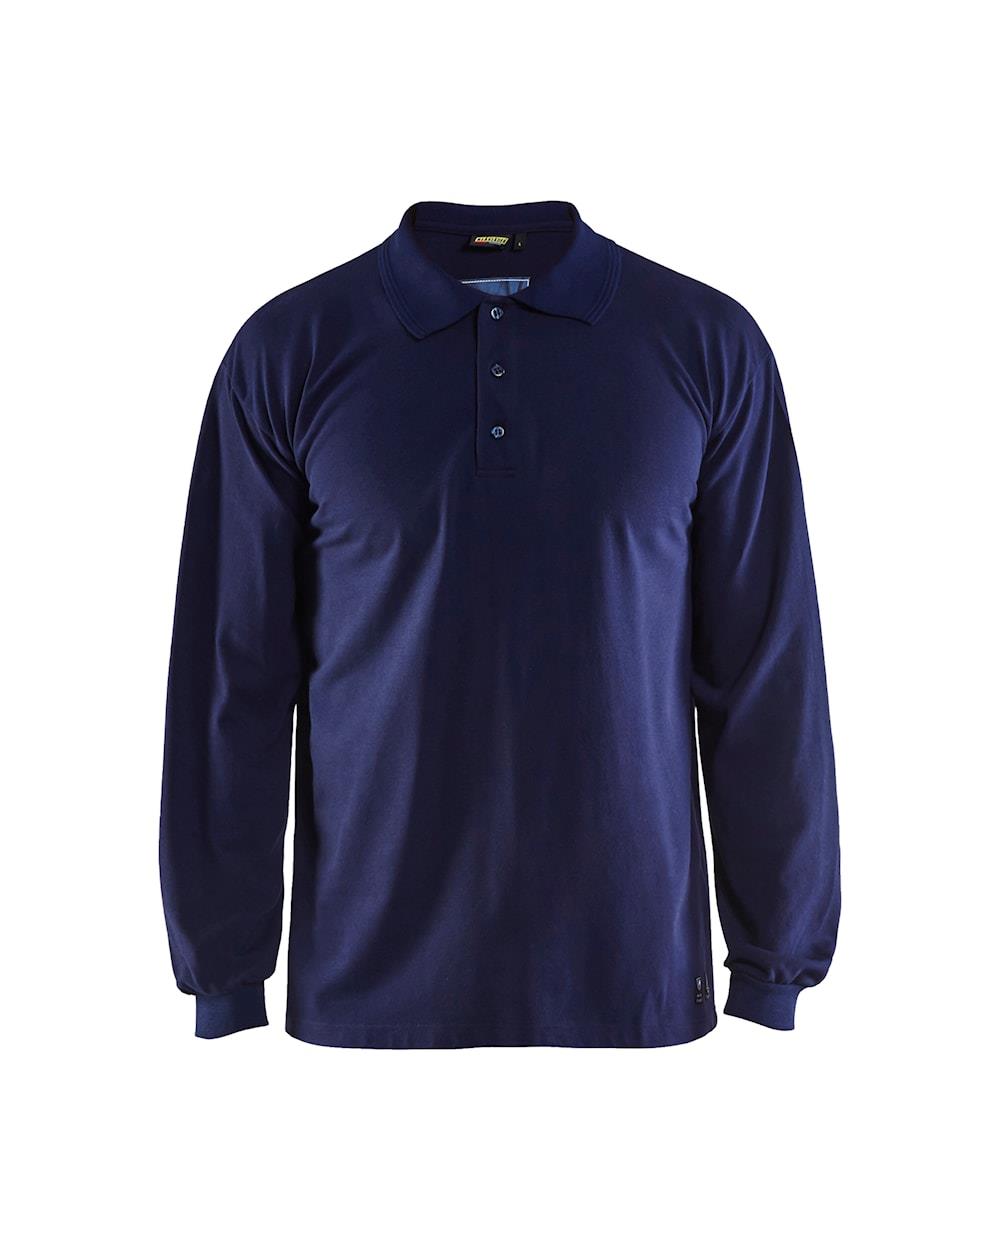 Blaklader navy/blue men's flame-resistant long-sleeve polo shirt #3374